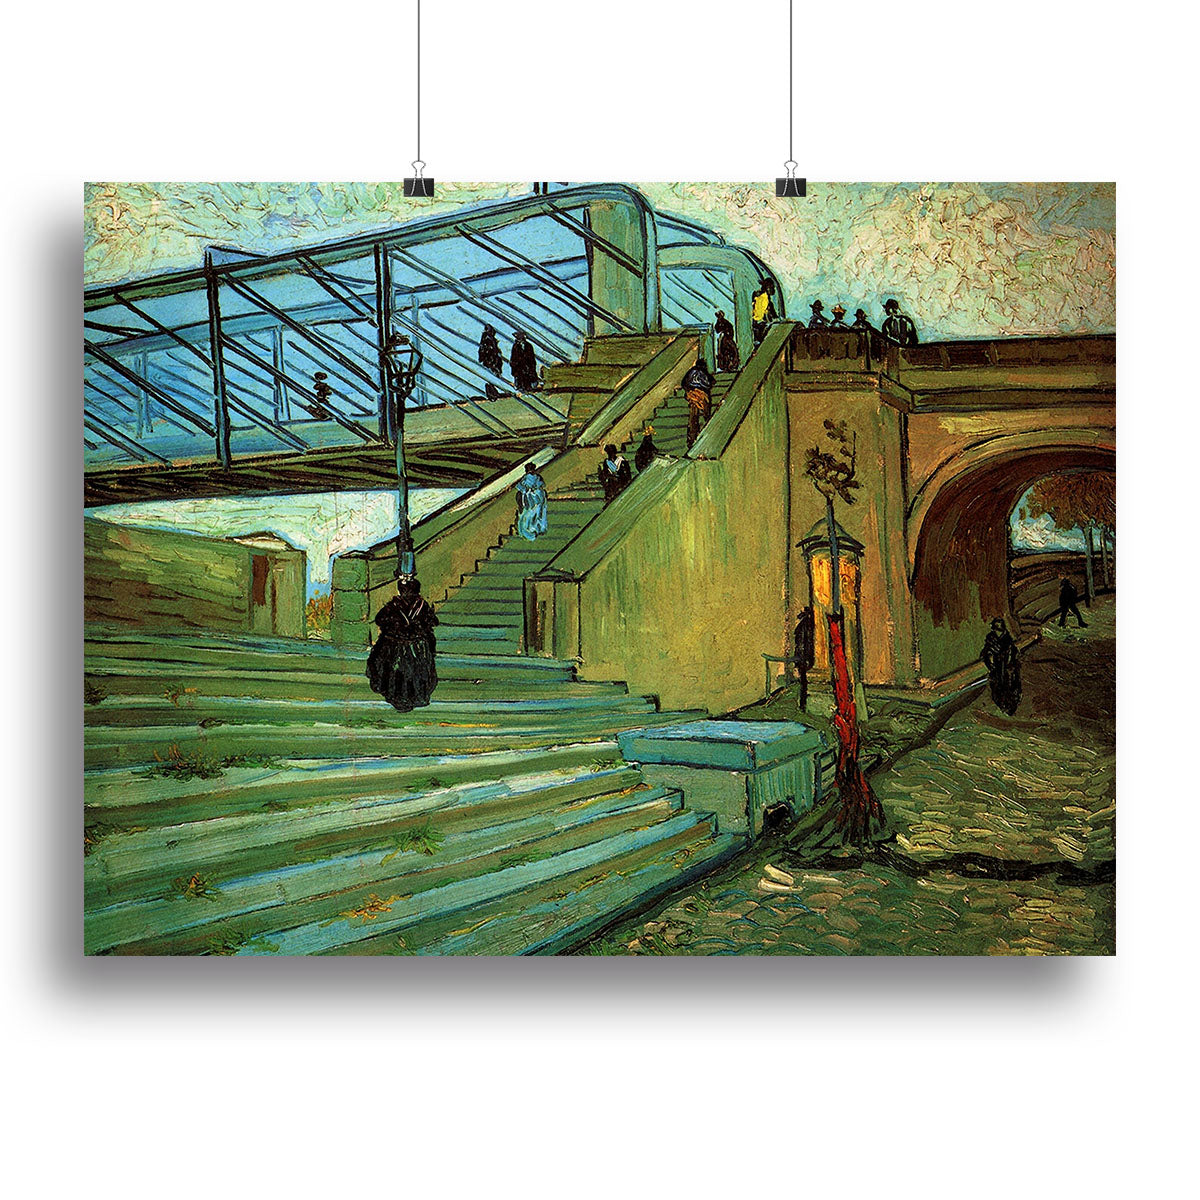 The Trinquetaille Bridge by Van Gogh Canvas Print or Poster - Canvas Art Rocks - 2